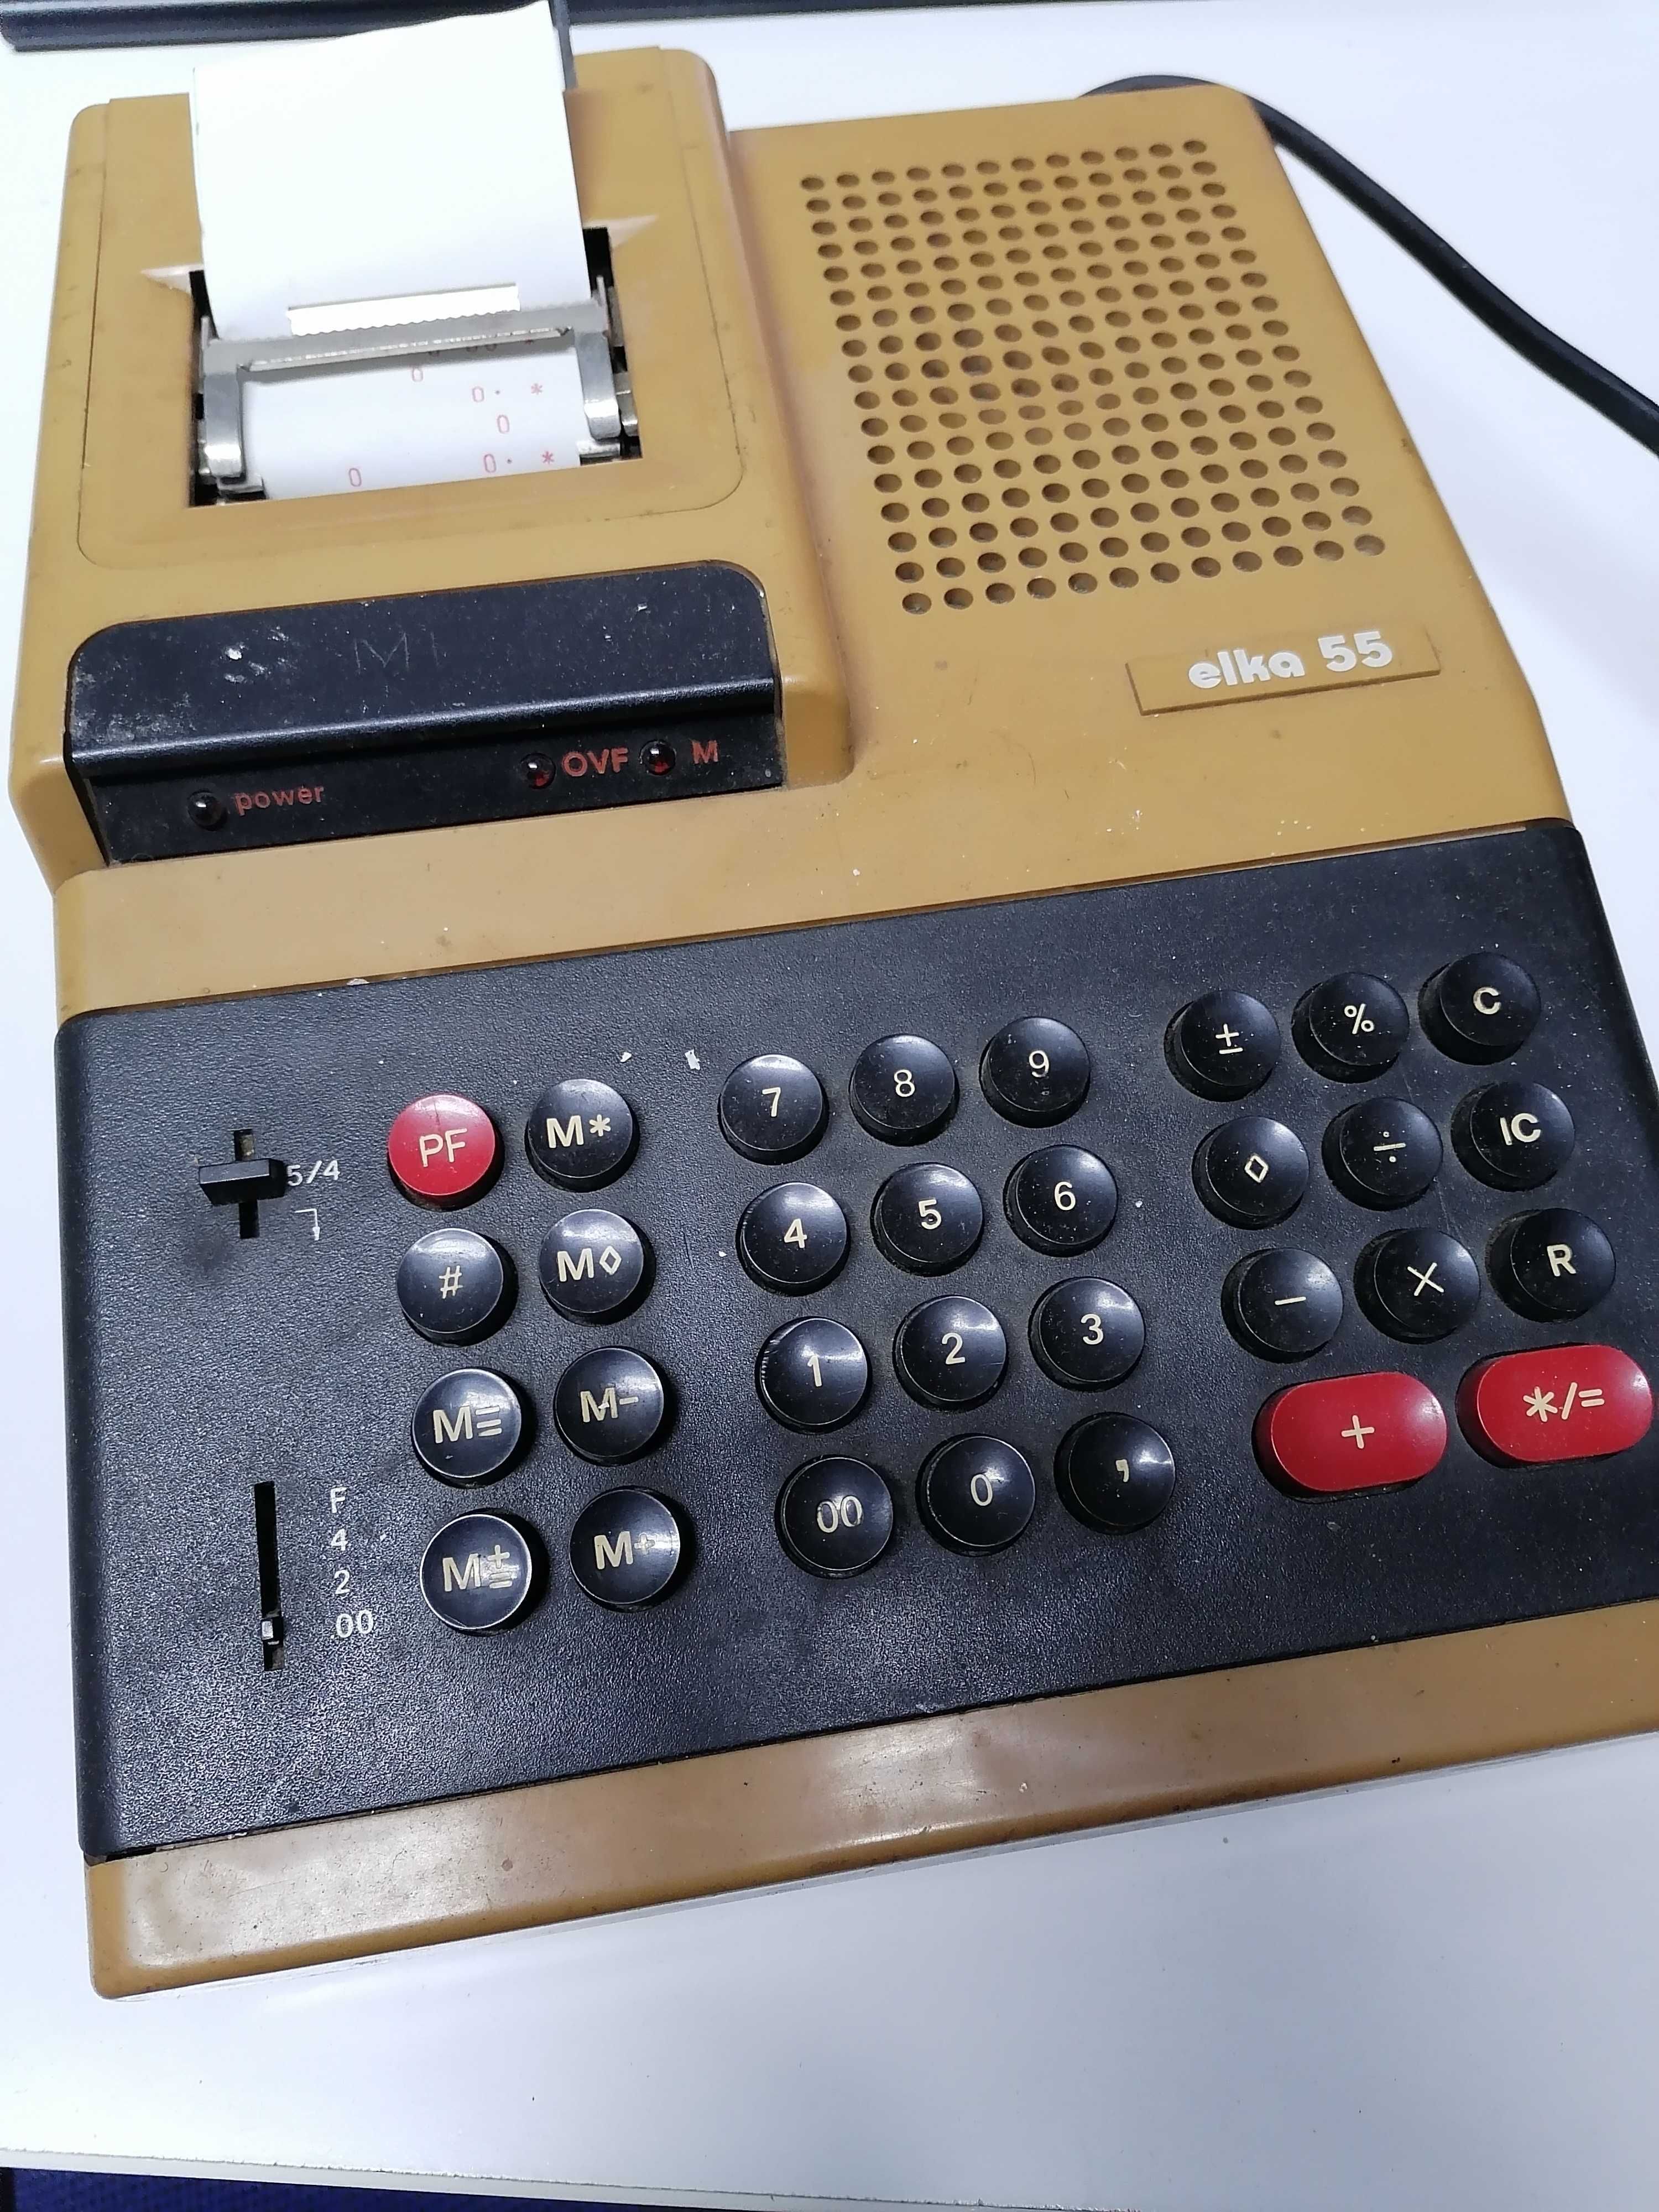 Calculator electronic vintage ELKA 55. Masina de calculat de colectie